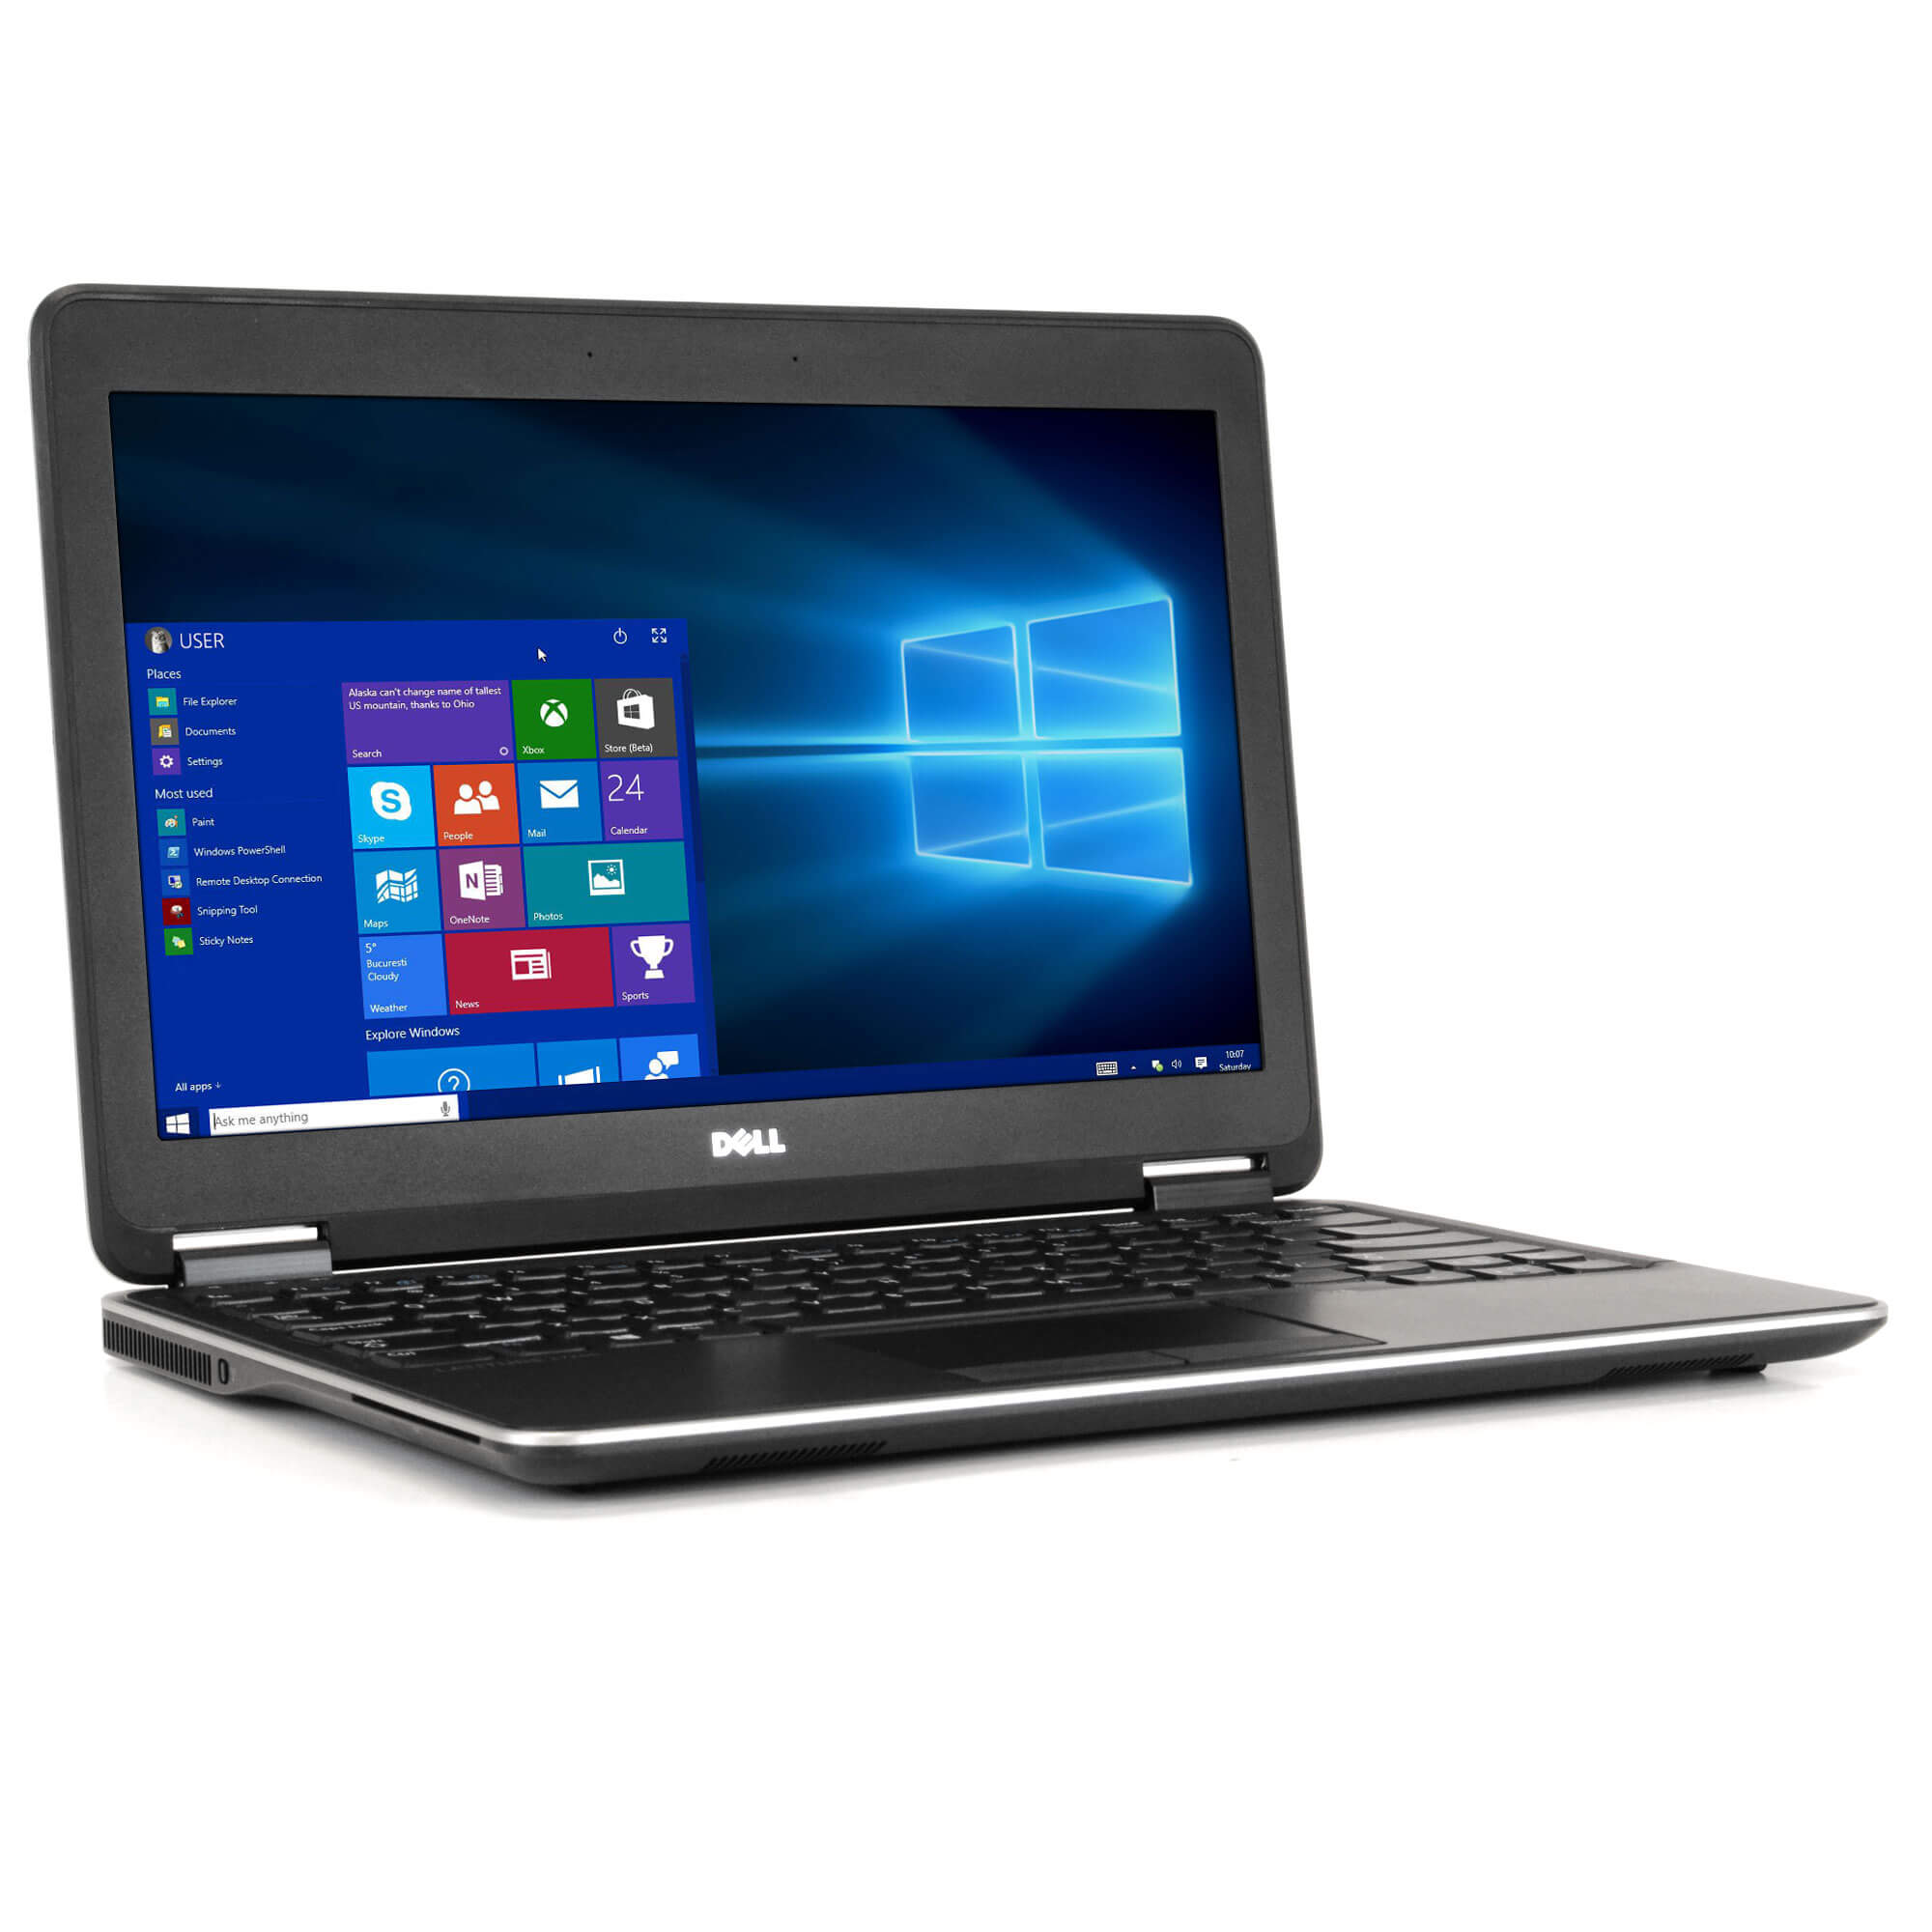 Dell Latitude E7440 Laptop Computer, 1.90 GHz Intel i5 Dual Core Gen 4, 4GB DDR3 RAM, 512GB Solid State Drive (SSD) SSD Hard Drive, Windows 10 Home 64Bit, 14" Screen (B GRADE) - image 2 of 8